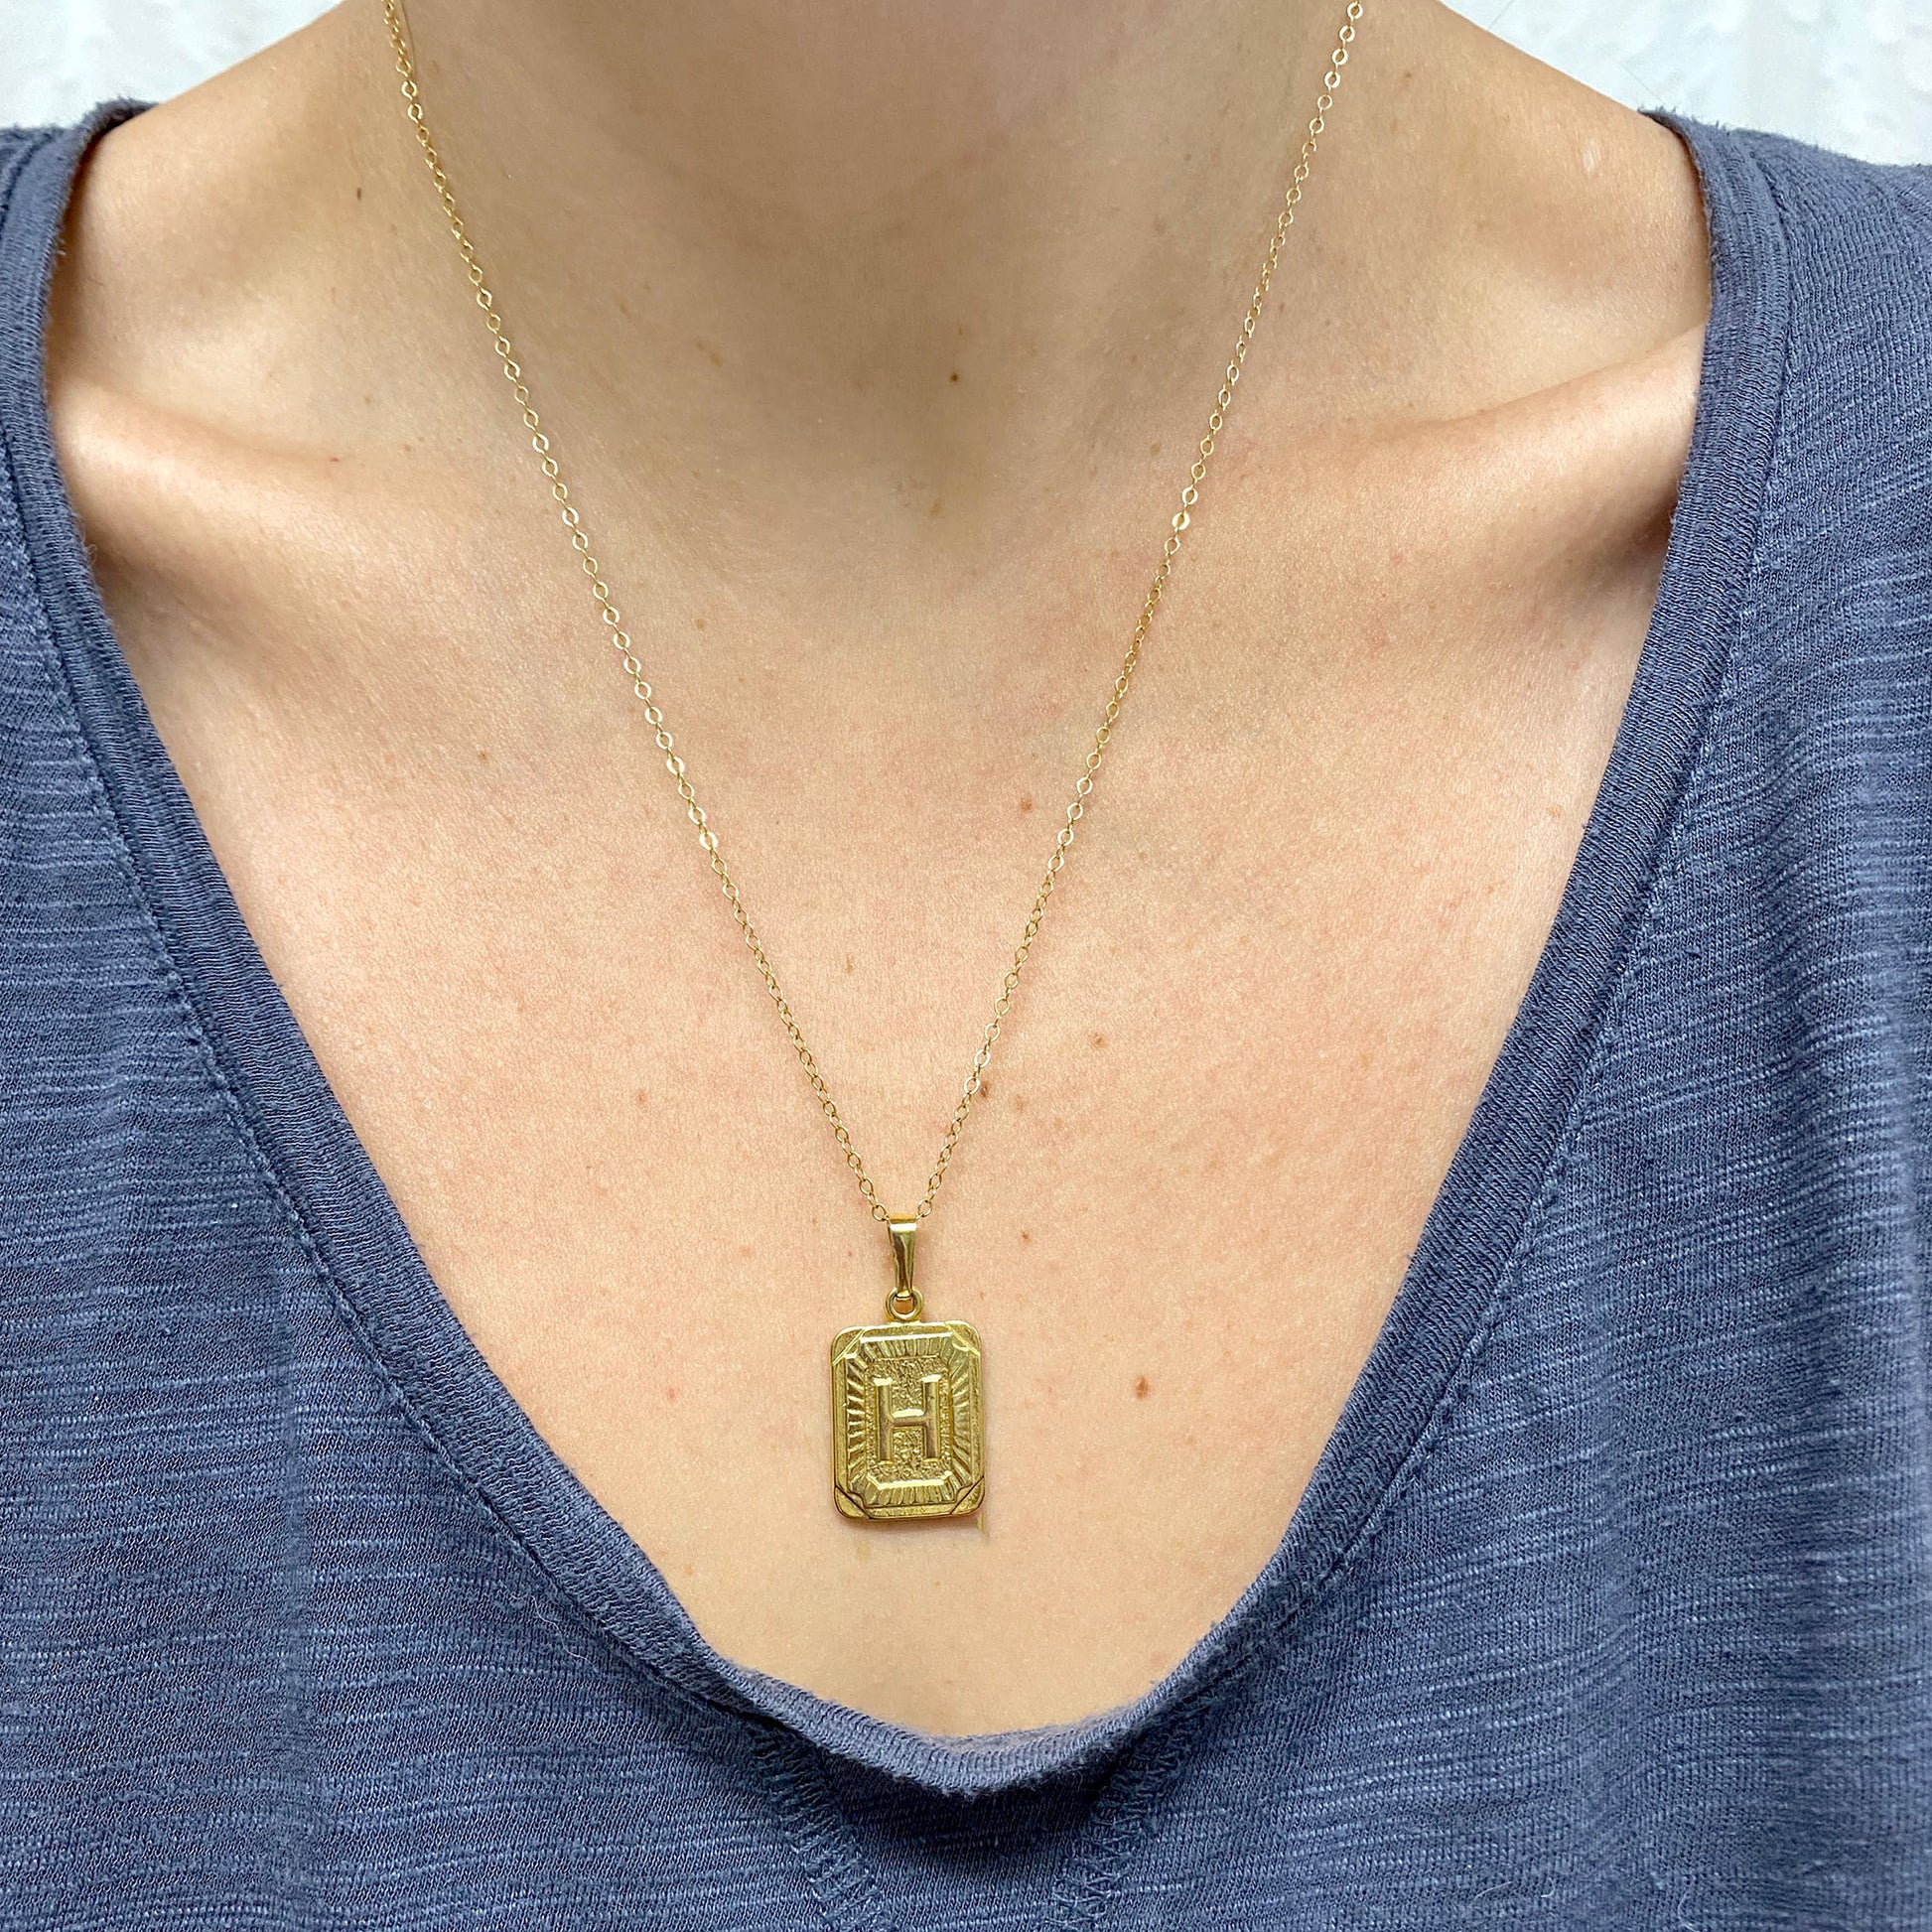 Gold Antiqued Medallion Initial Pendant Necklace - K